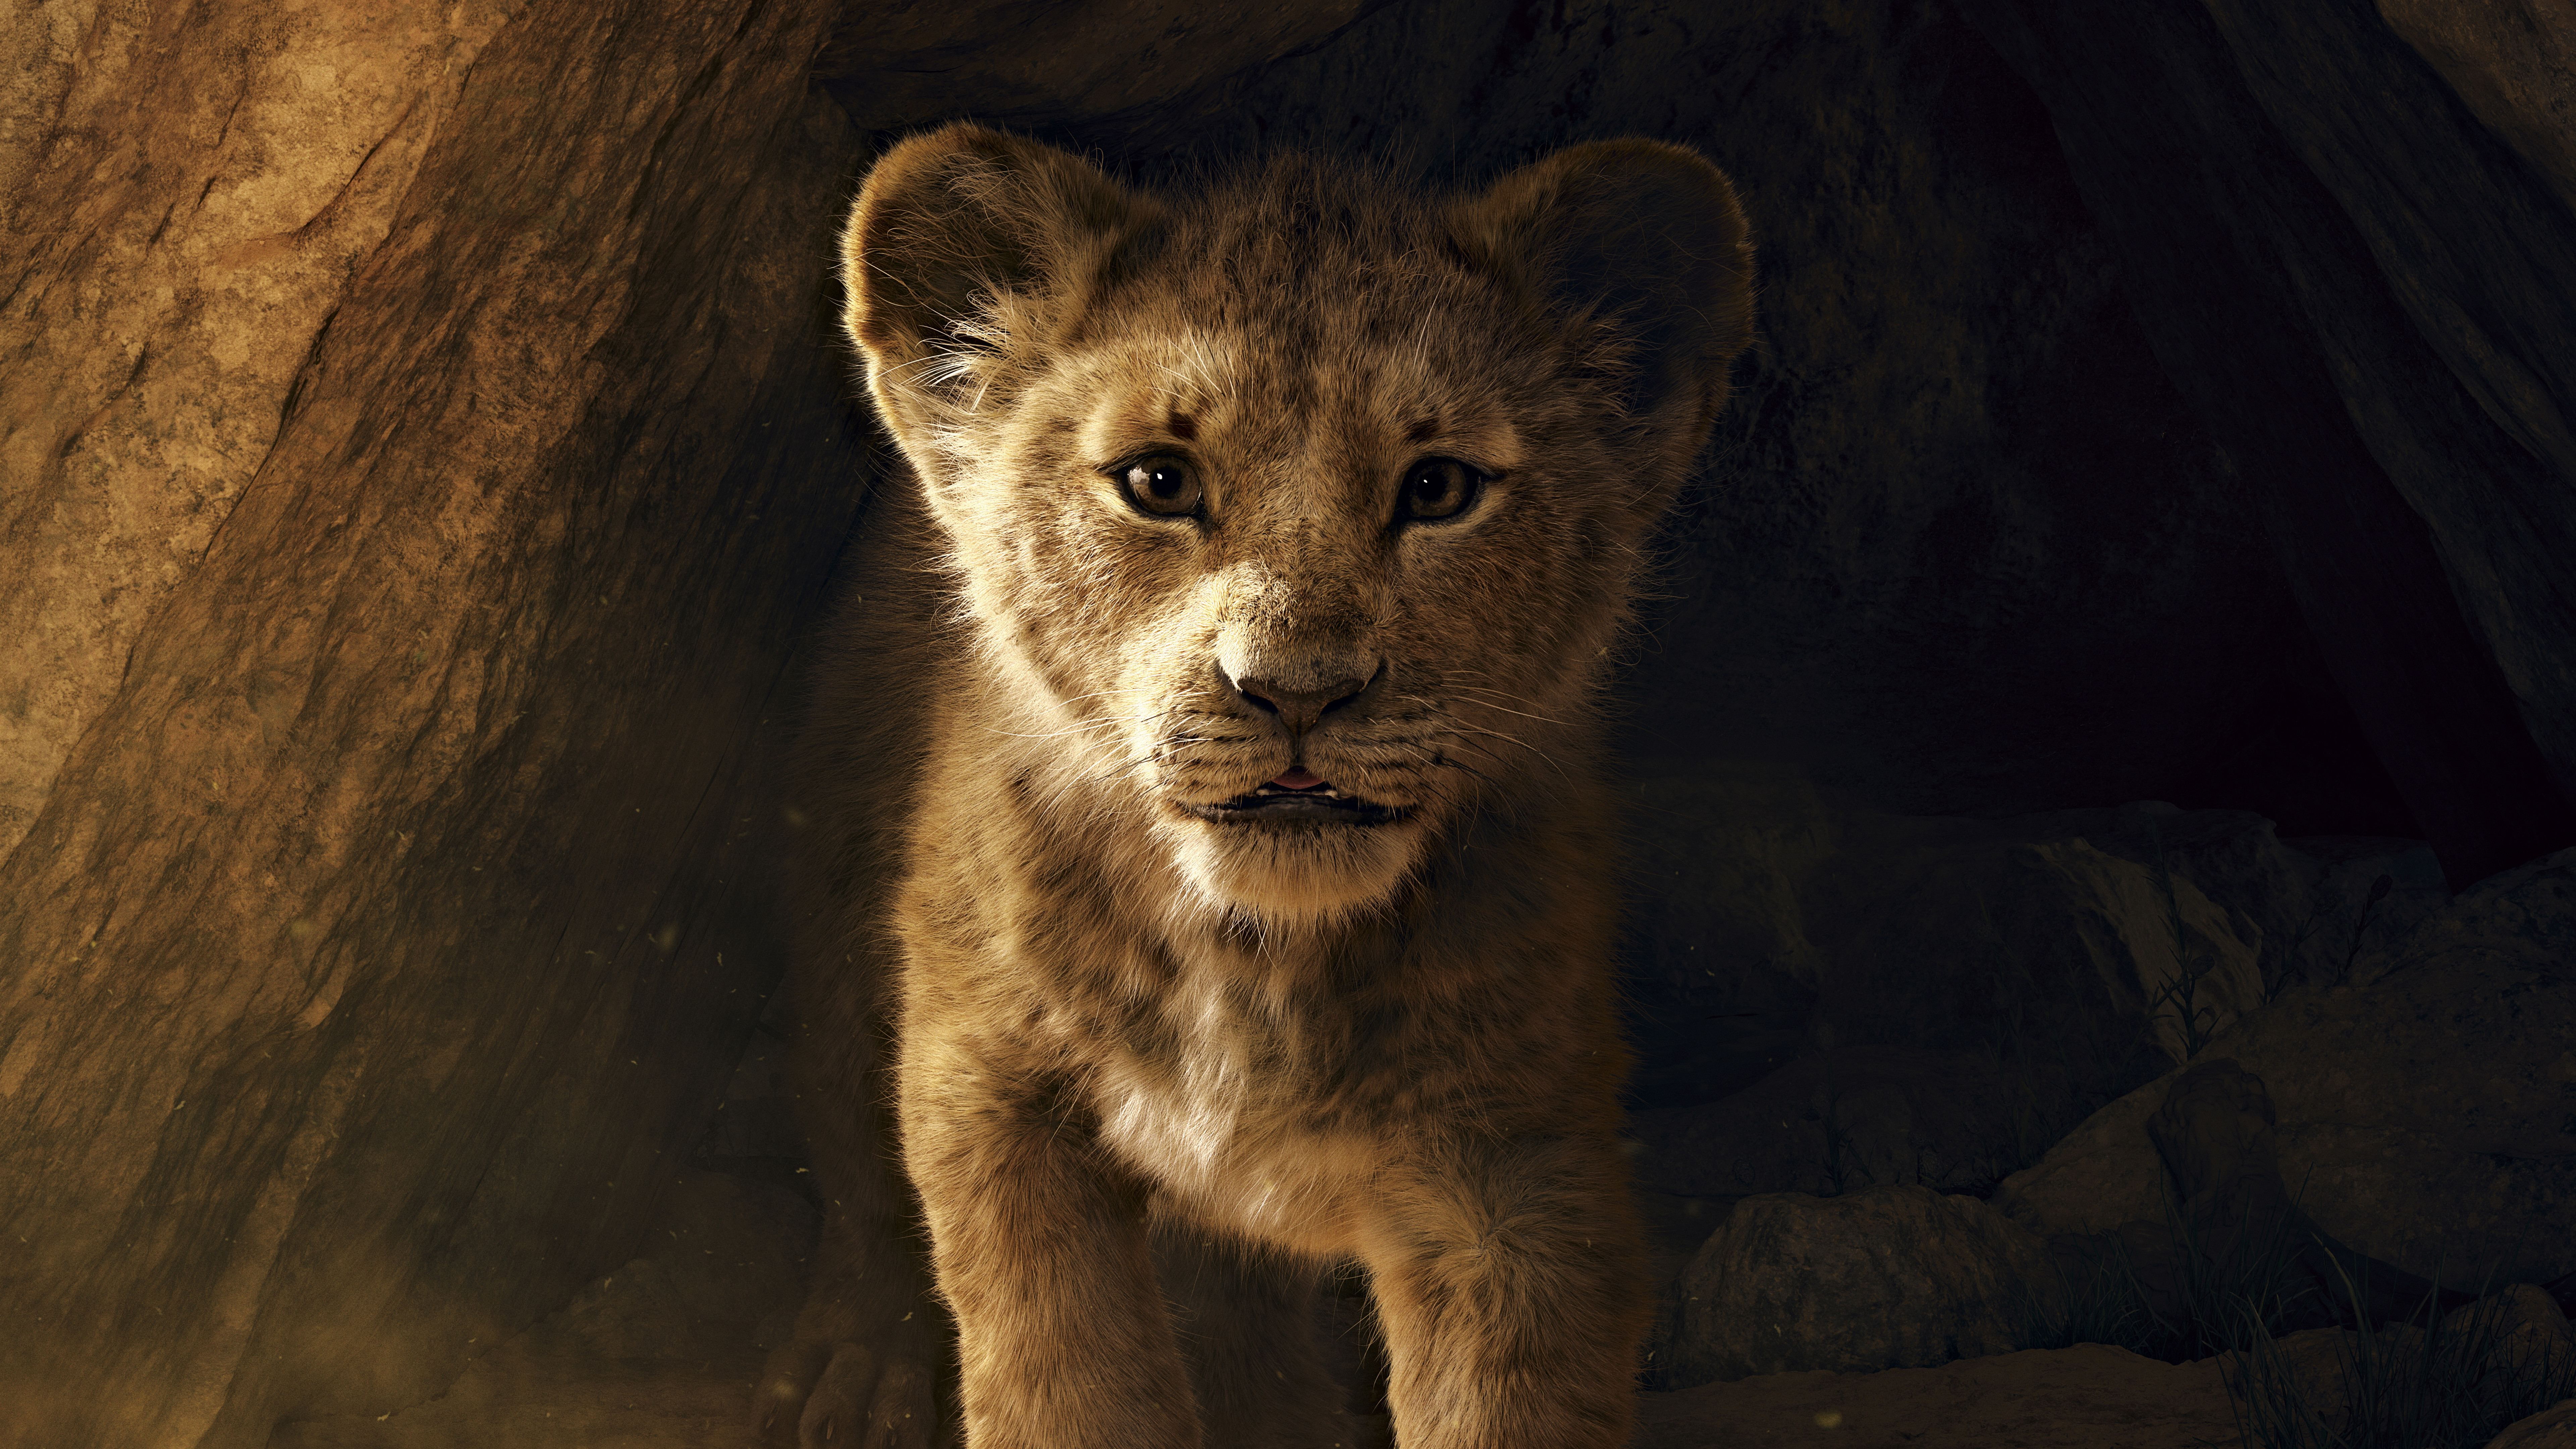 The Lion King 2019 Simba 8K Wallpaper